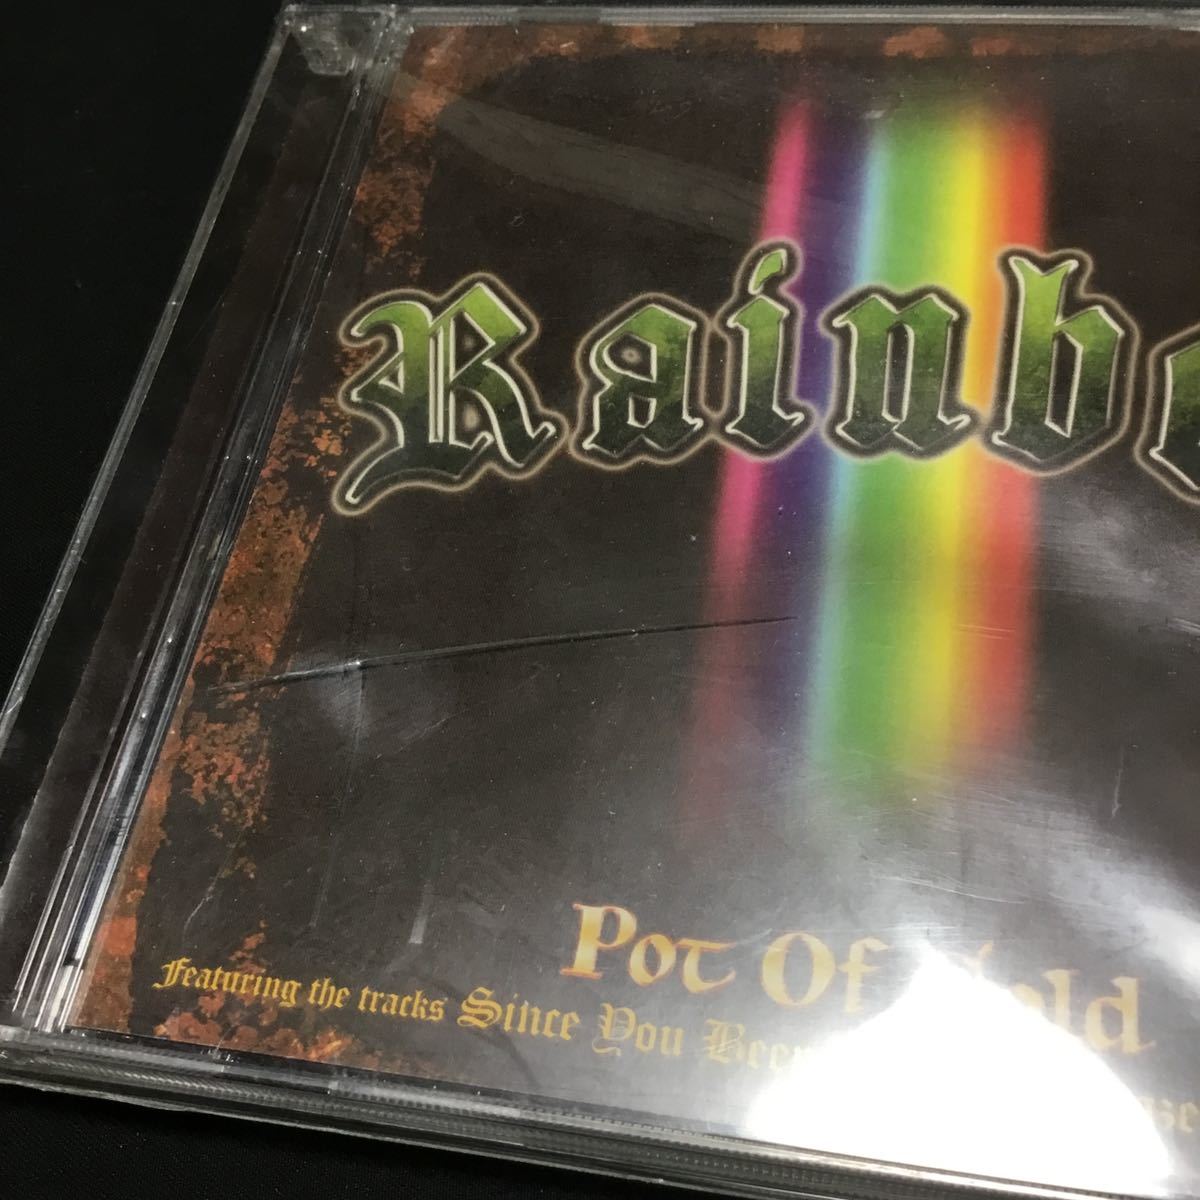 CD unopened Pot Of Gold Rainbow 731454465120